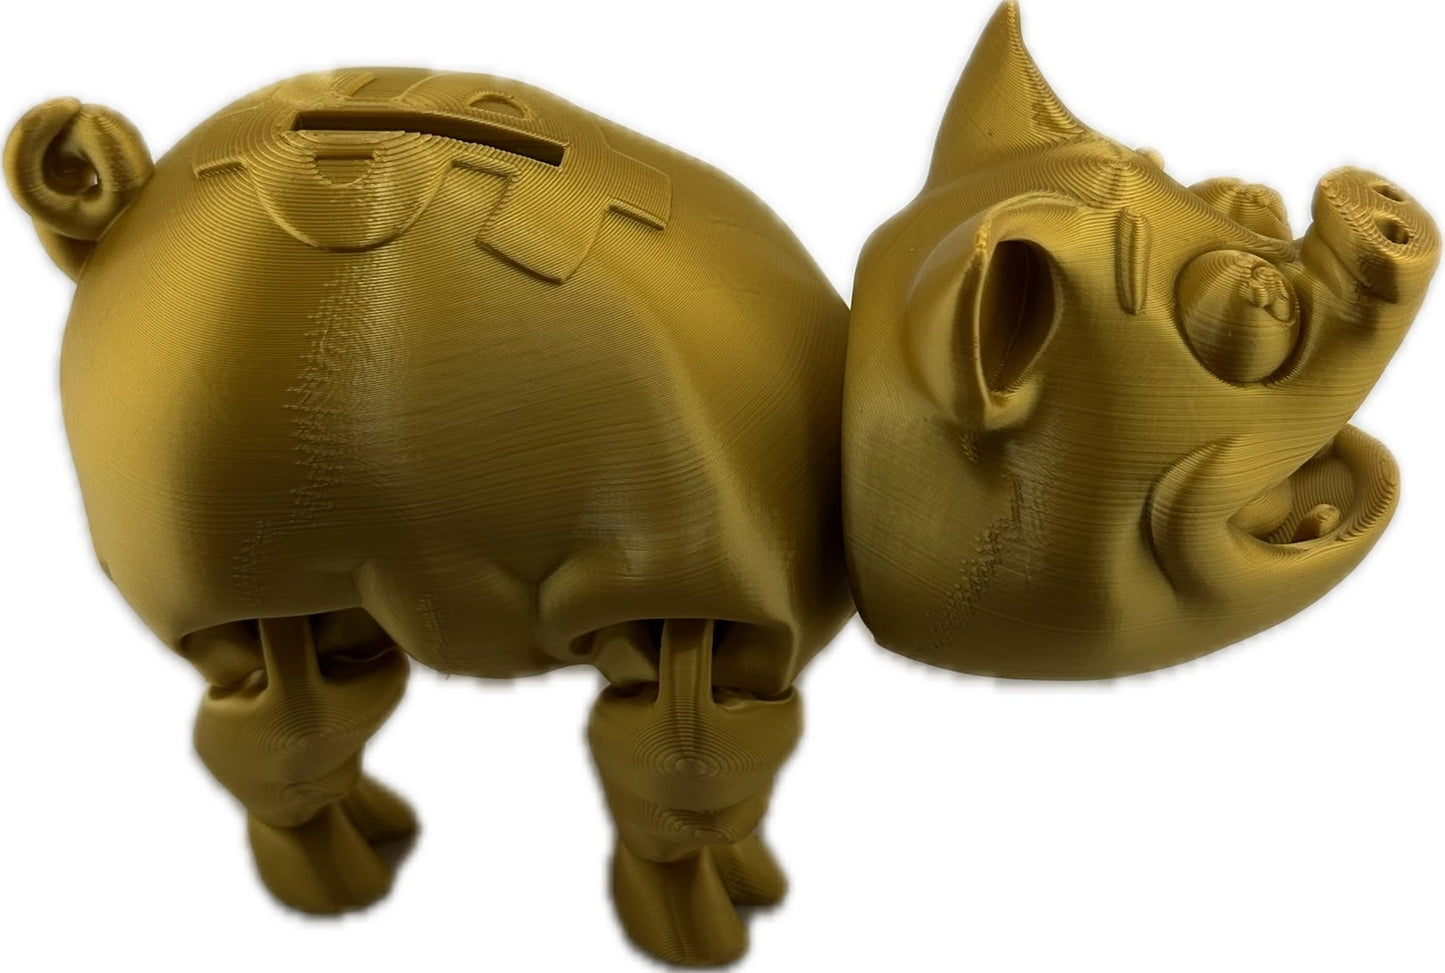 Piggy Bank - Articulated Piggy Bank - 3D Piggy Bank - Acworth Alchemist